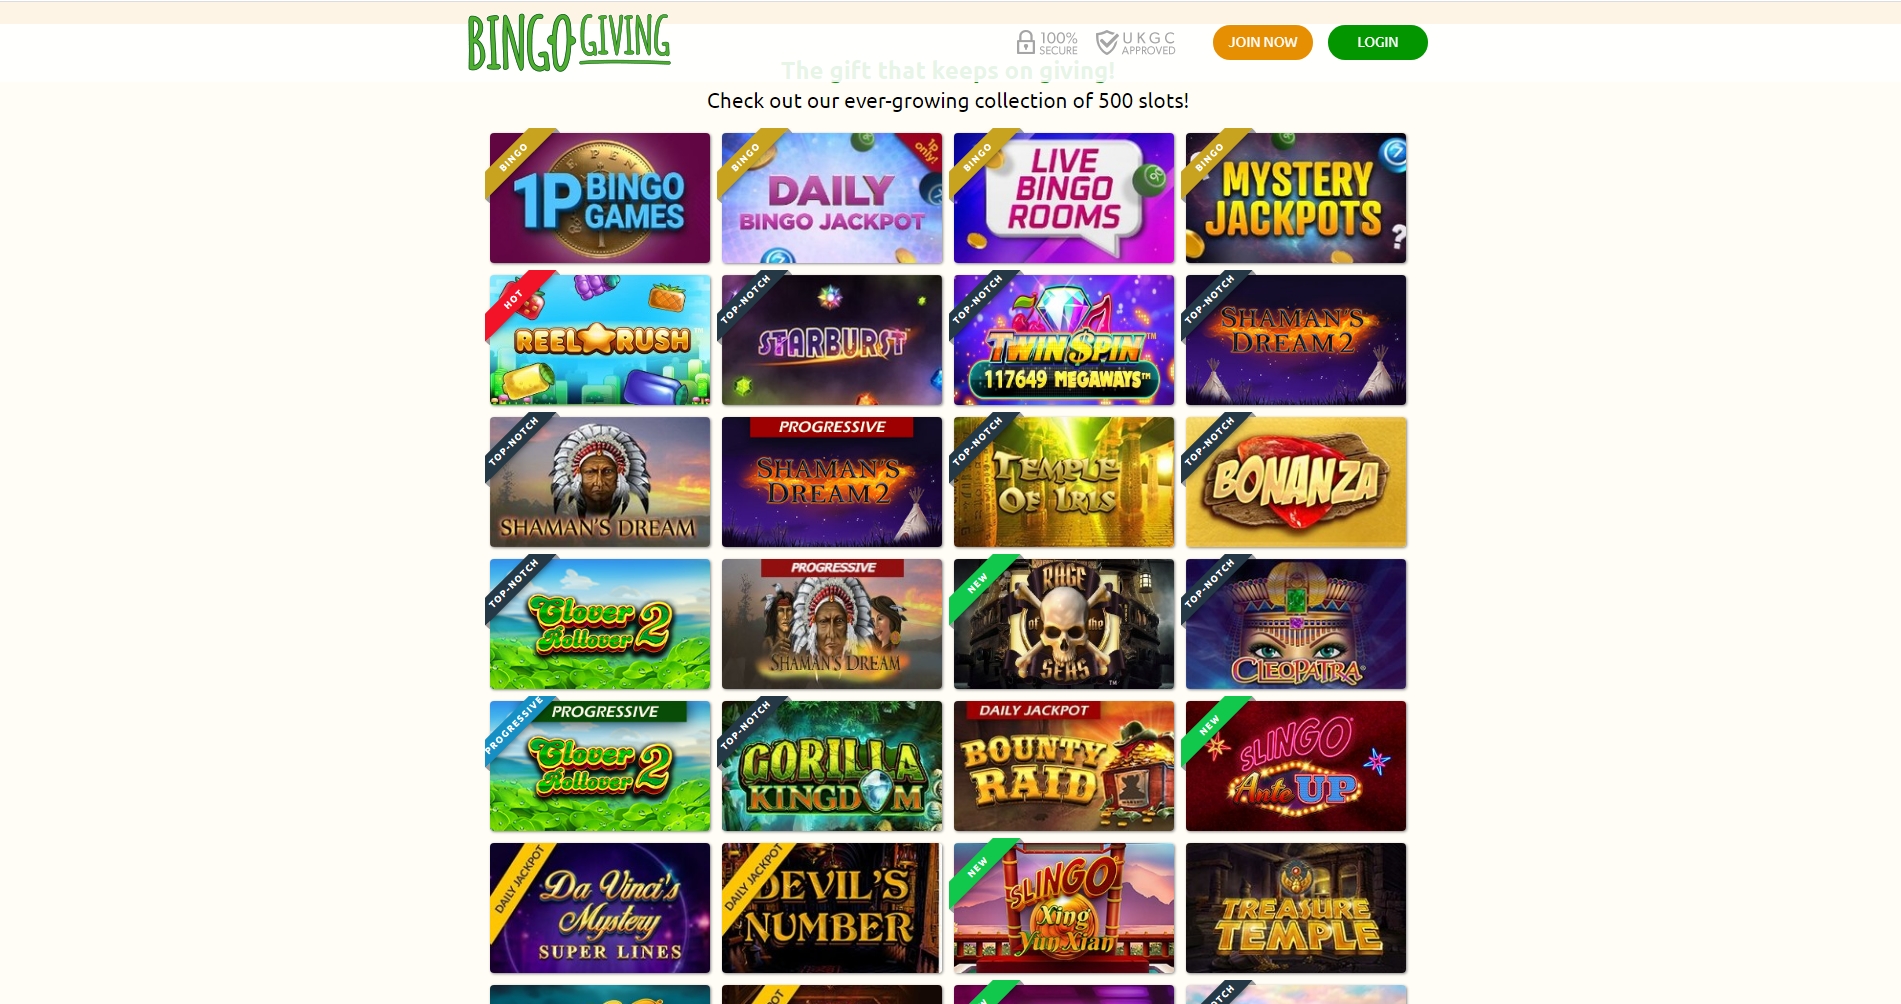 Bingo Giving Casino Games